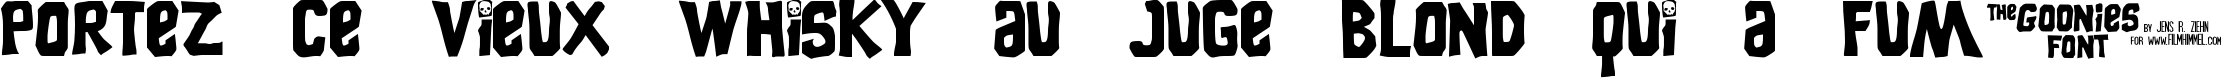 Пример написания шрифтом Goonies текста на французском